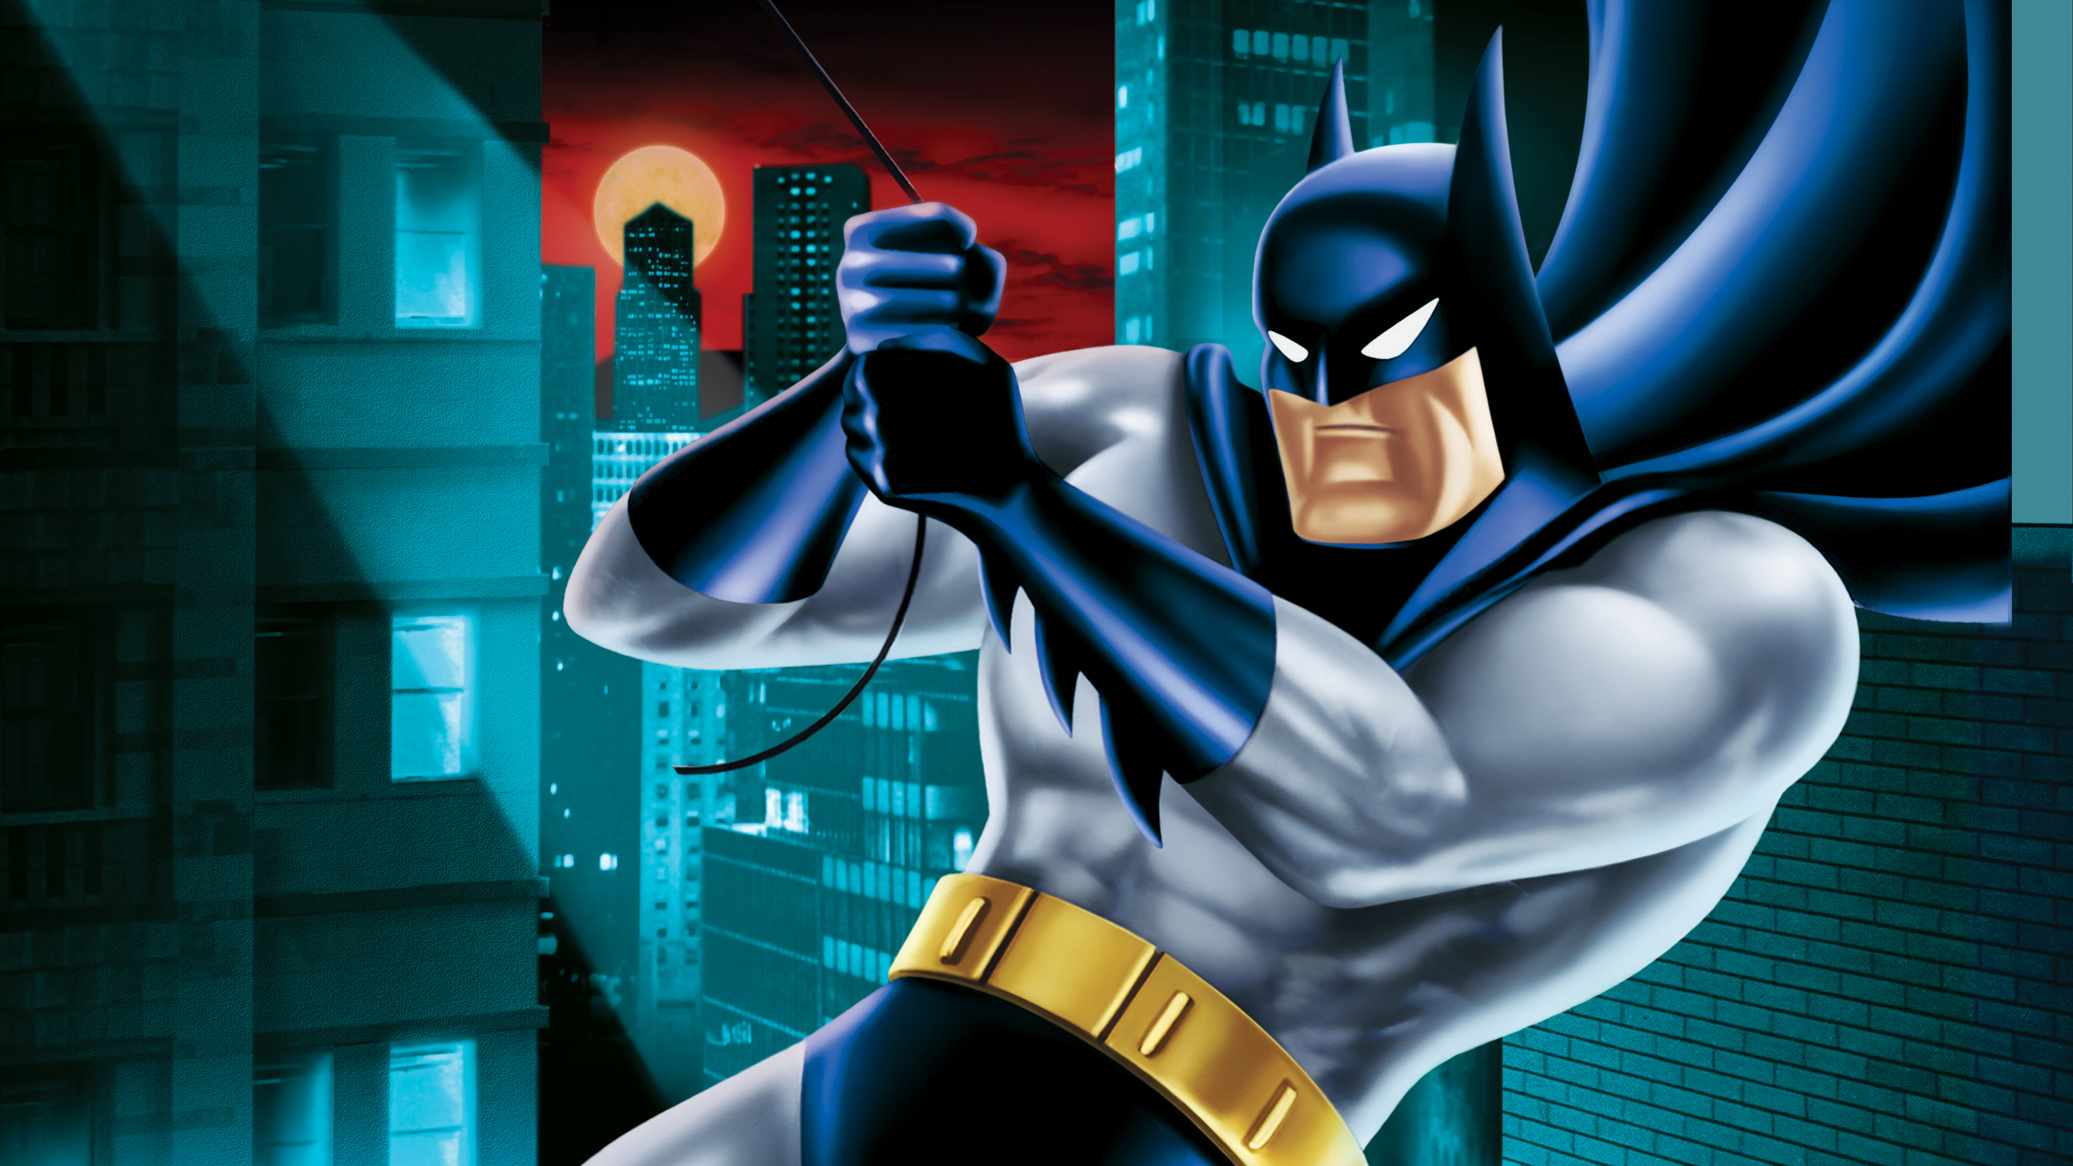 Batman: The Animated Series HD Wallpaper